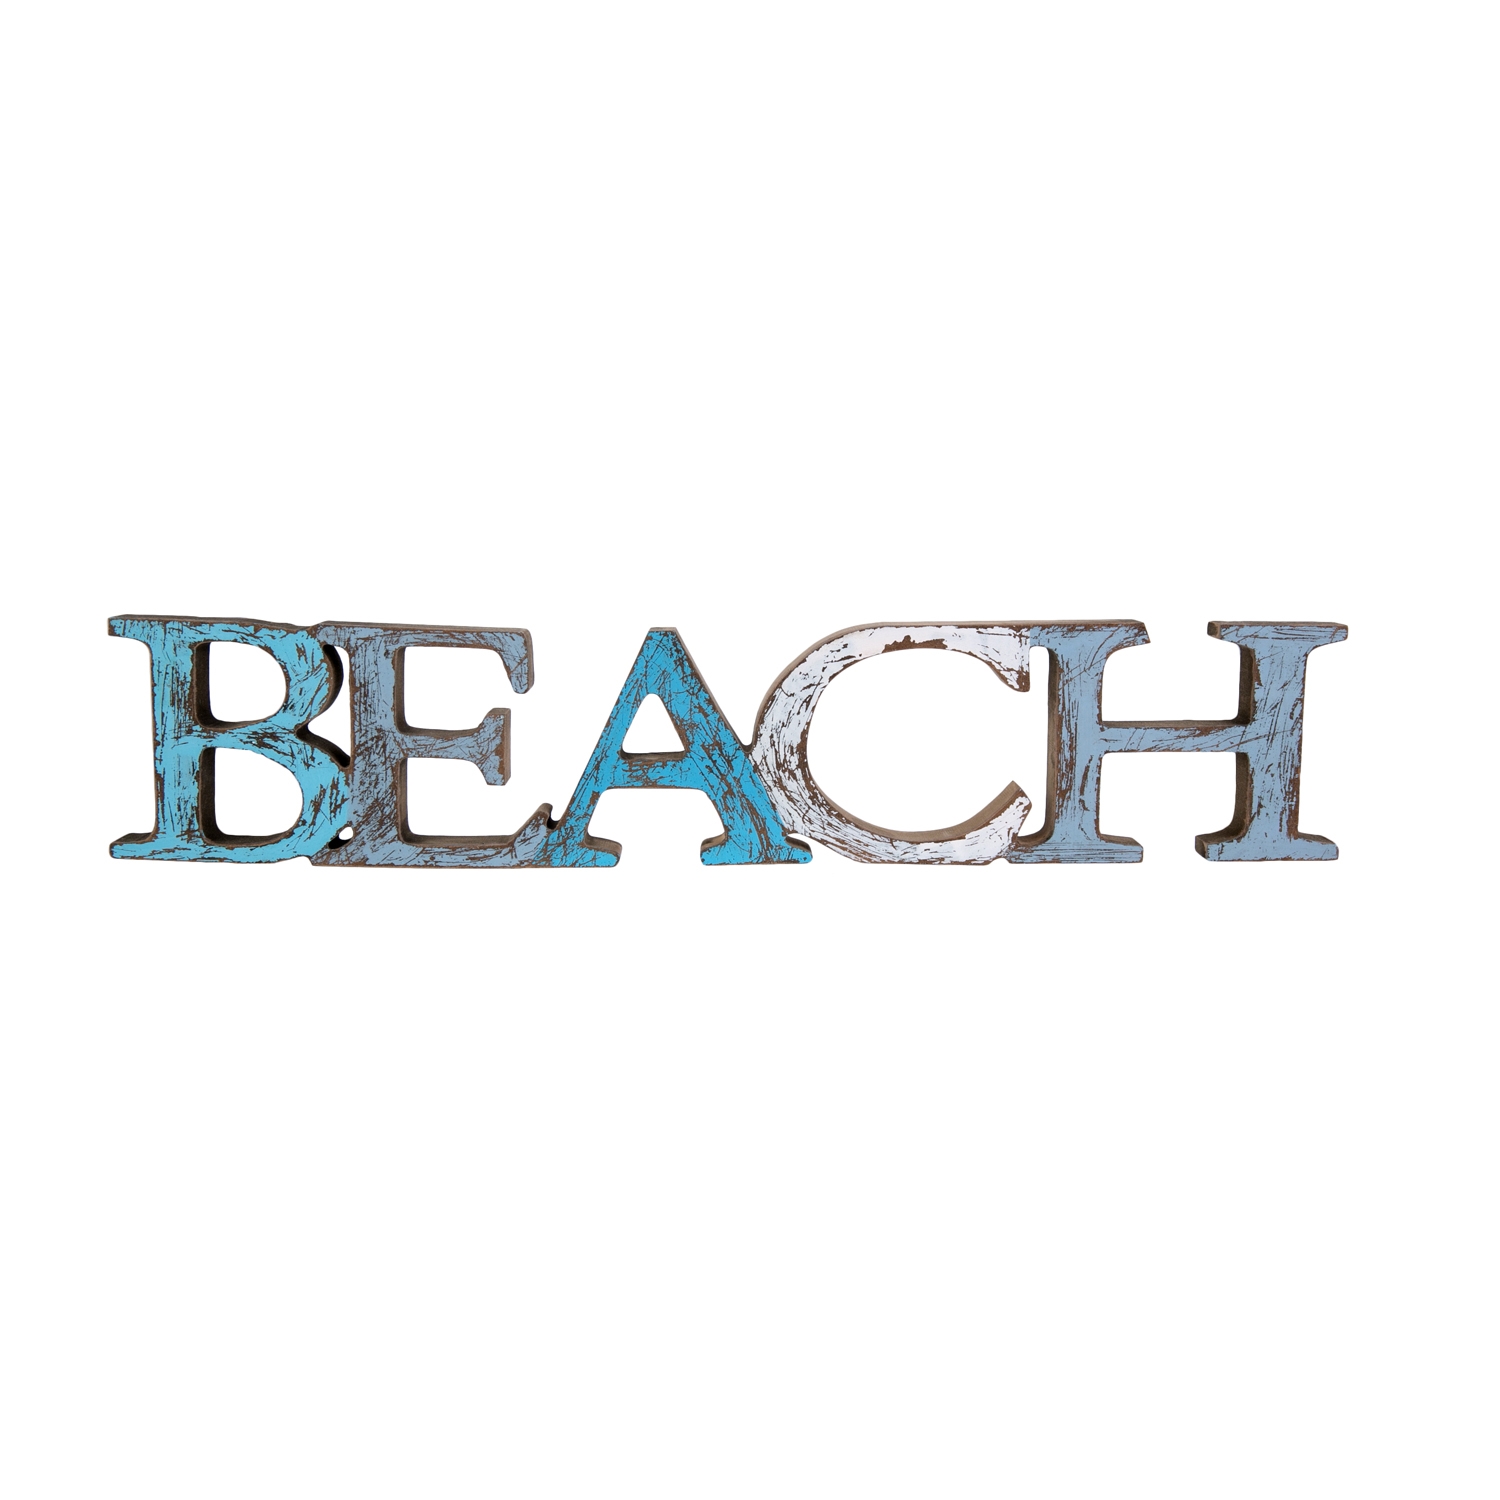 BEACH WORD FIGURE | Beachcombers Coastal Life